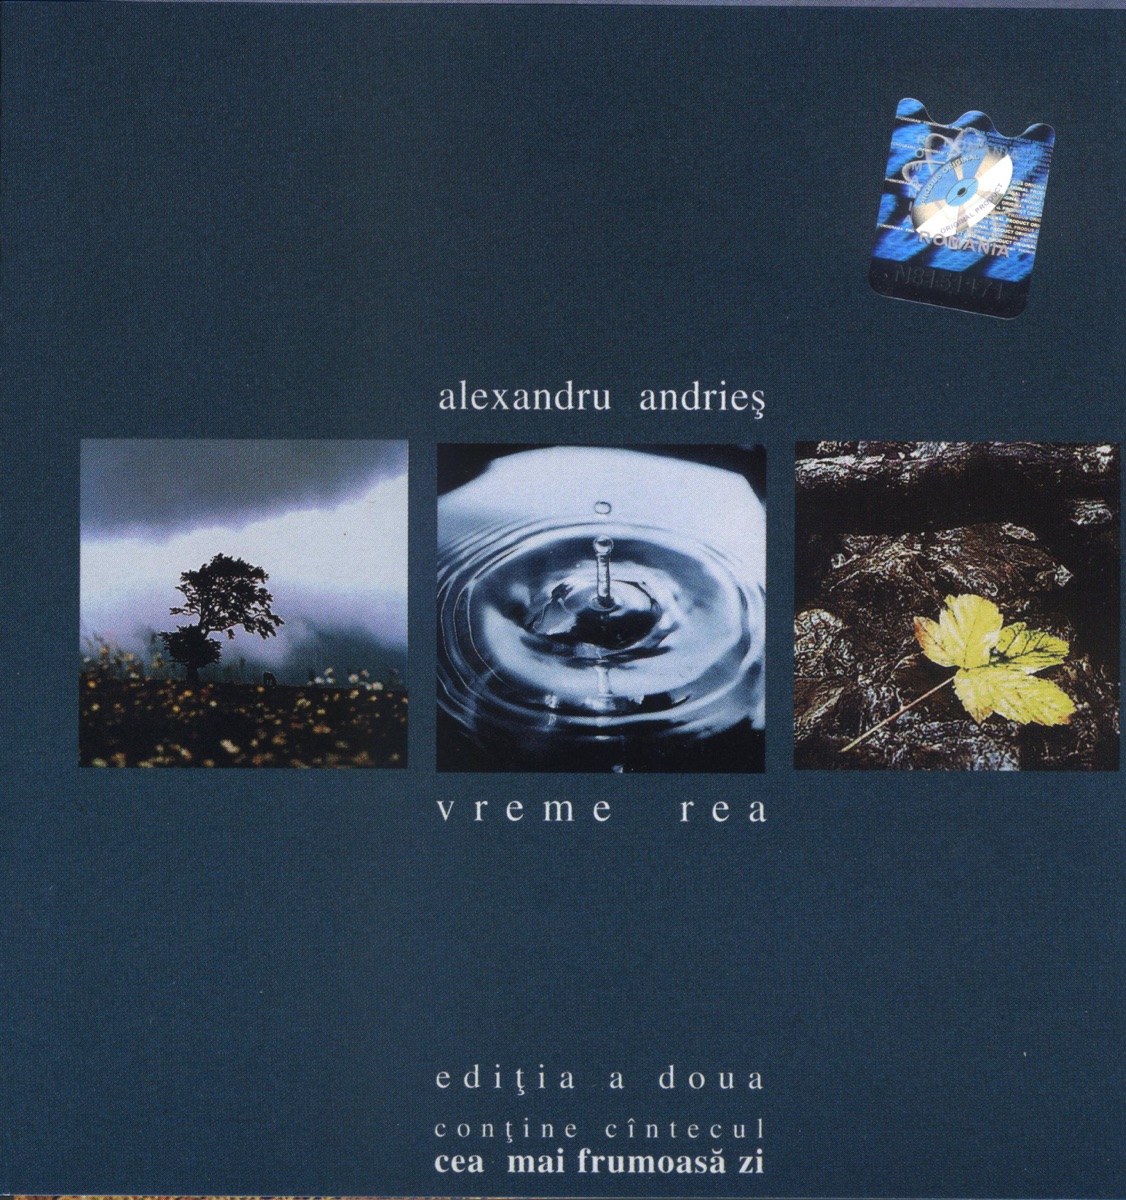 Despre Distante/Trei Oglinzi - Album by Alexandru Andries - Apple Music